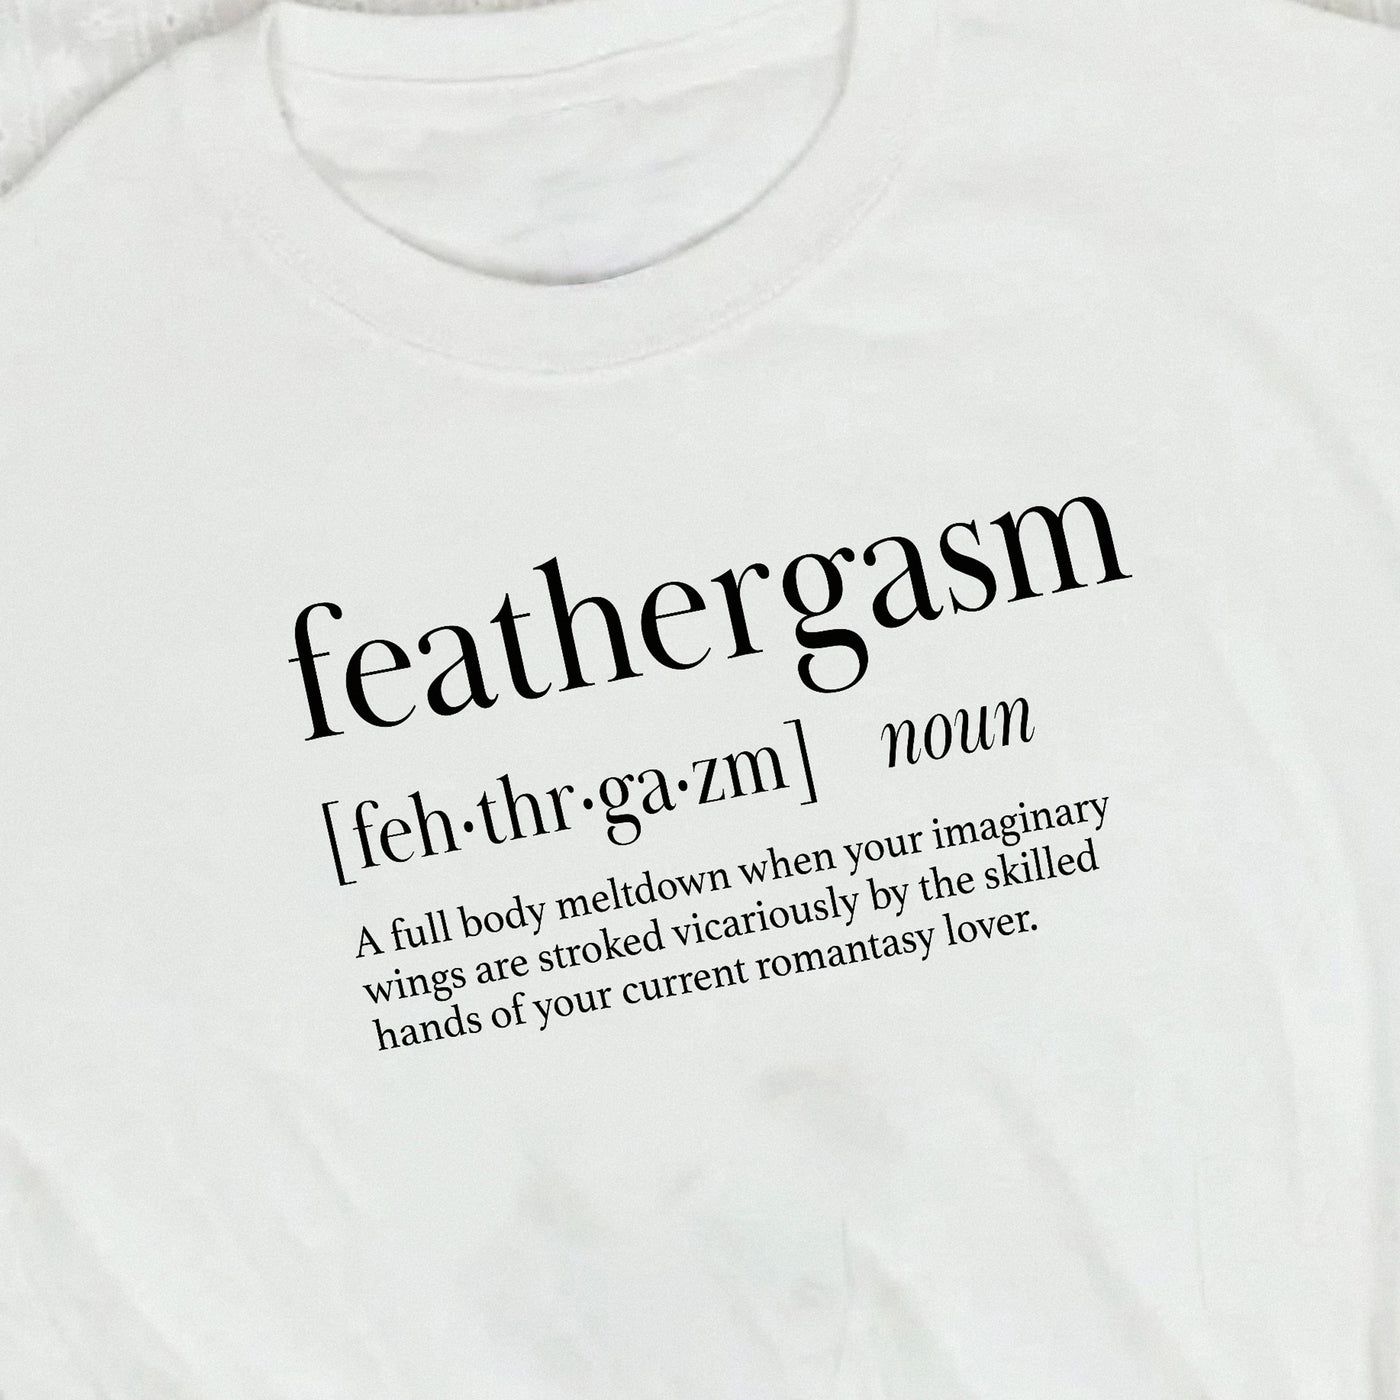 Lit Haven Booktique T-Shirt Feathergasm tee